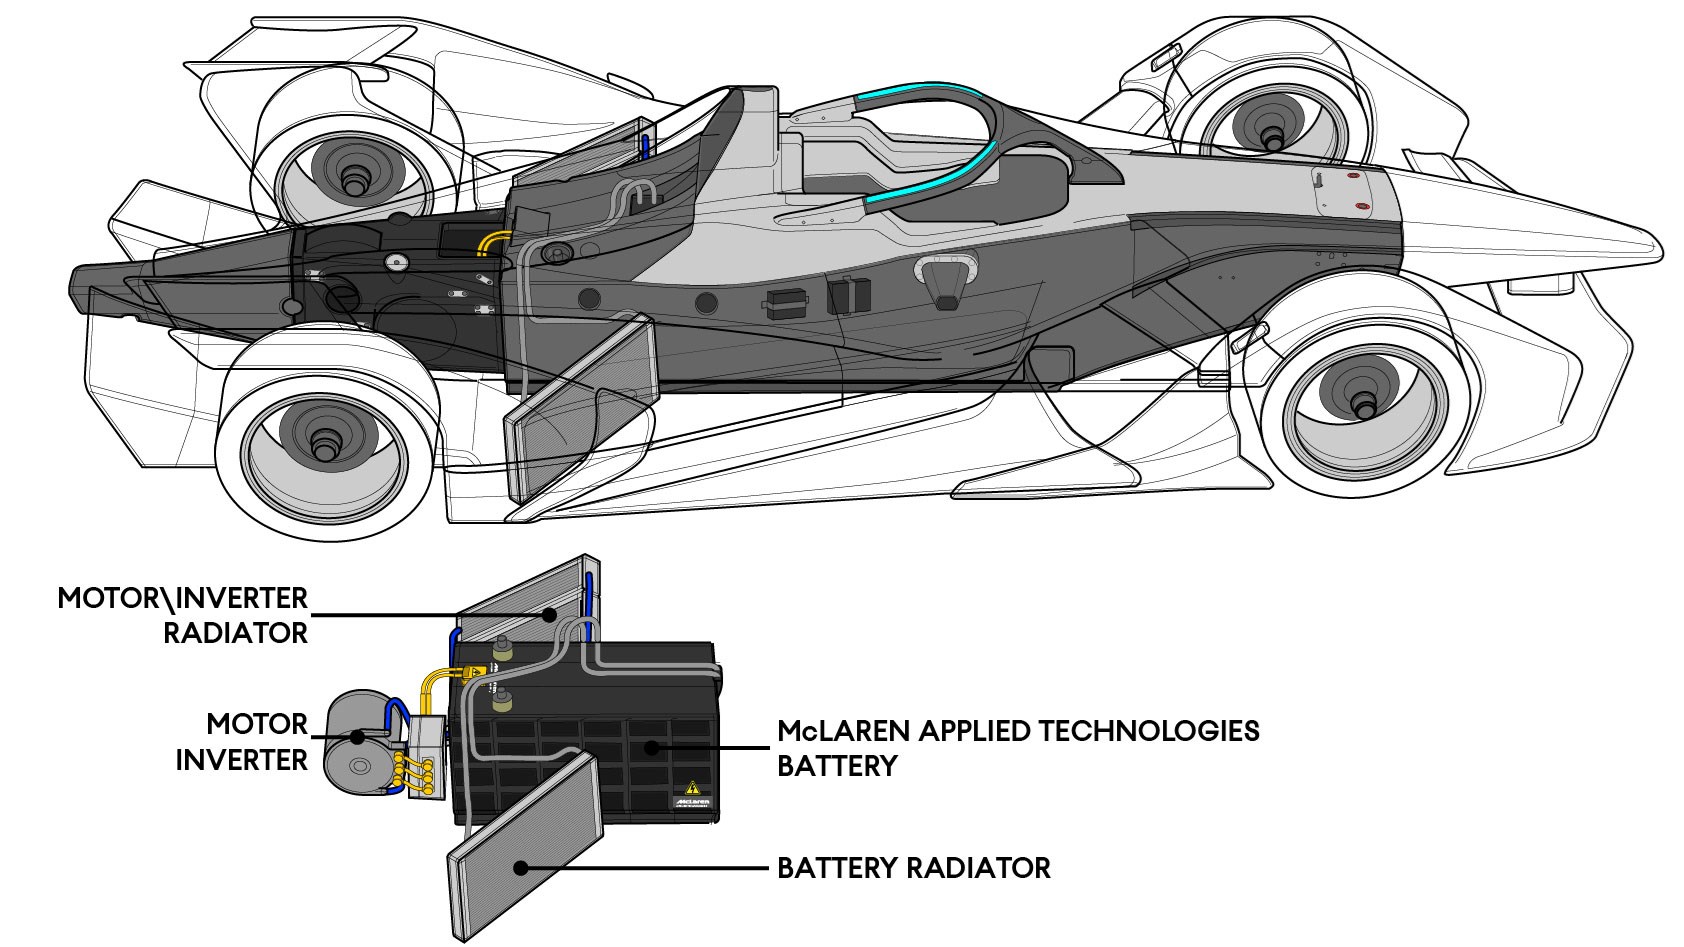 Jaguar Unveils Lighter And More Powerful I-Type 6 Race Car For Formula E